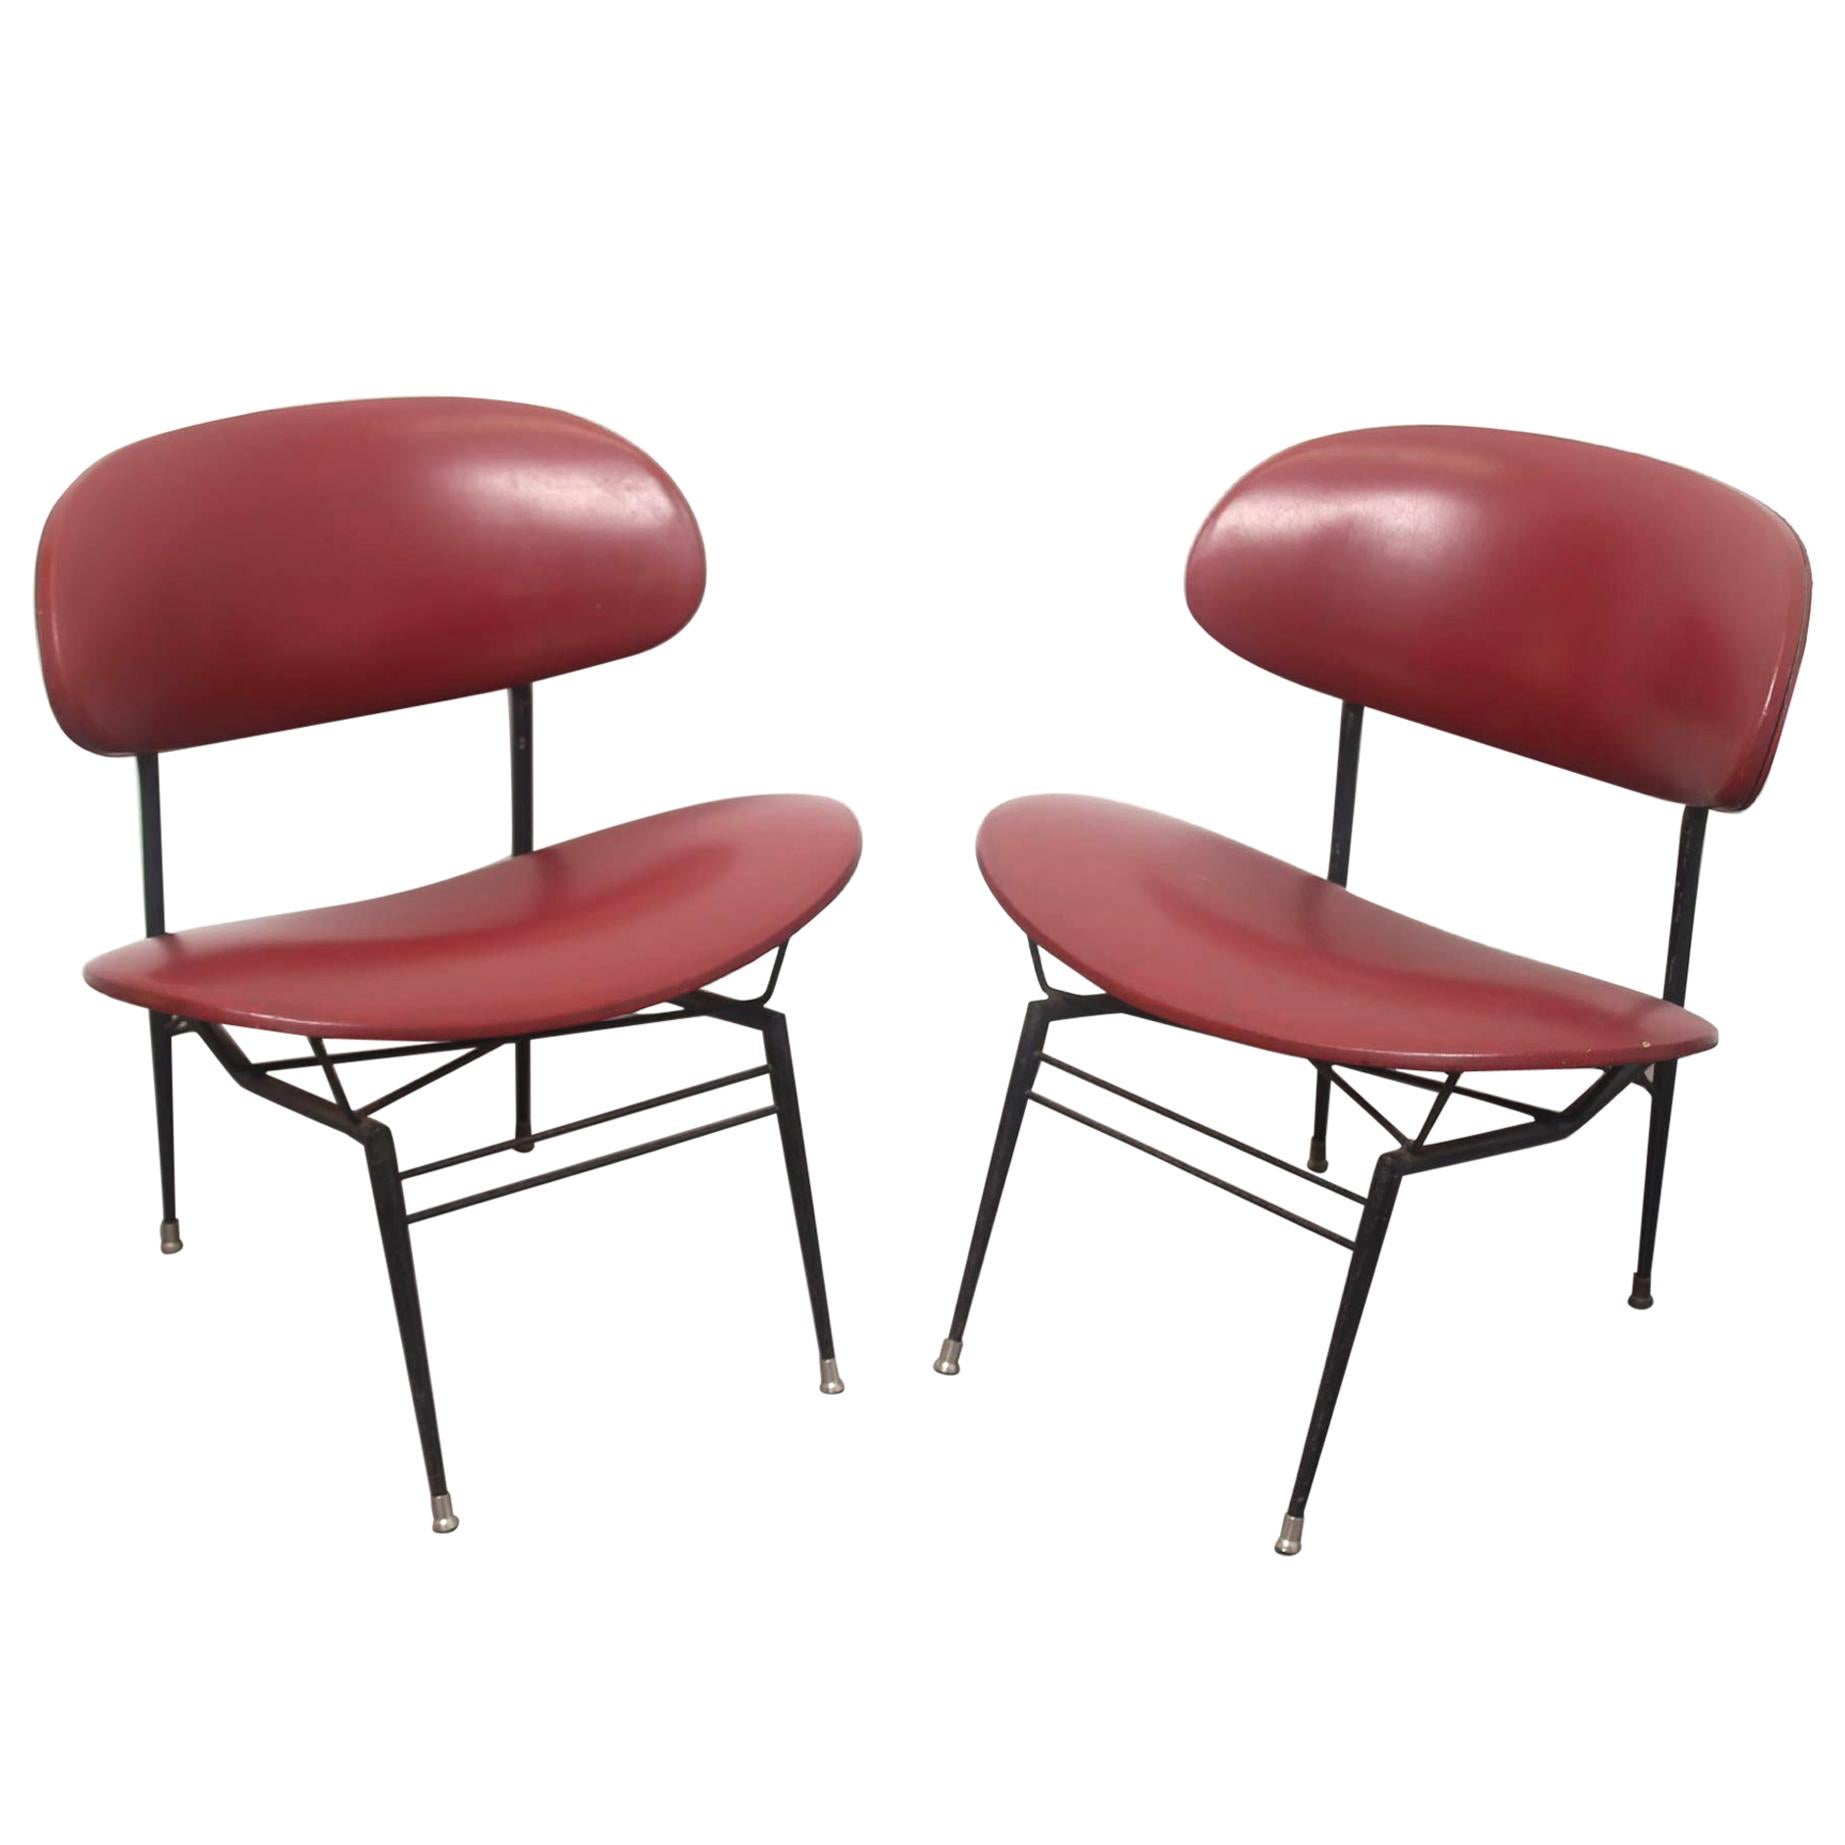 Italian Mid Century Modern Red Vinyl Lounge Chairs by Gastone Rinaldi, 1950